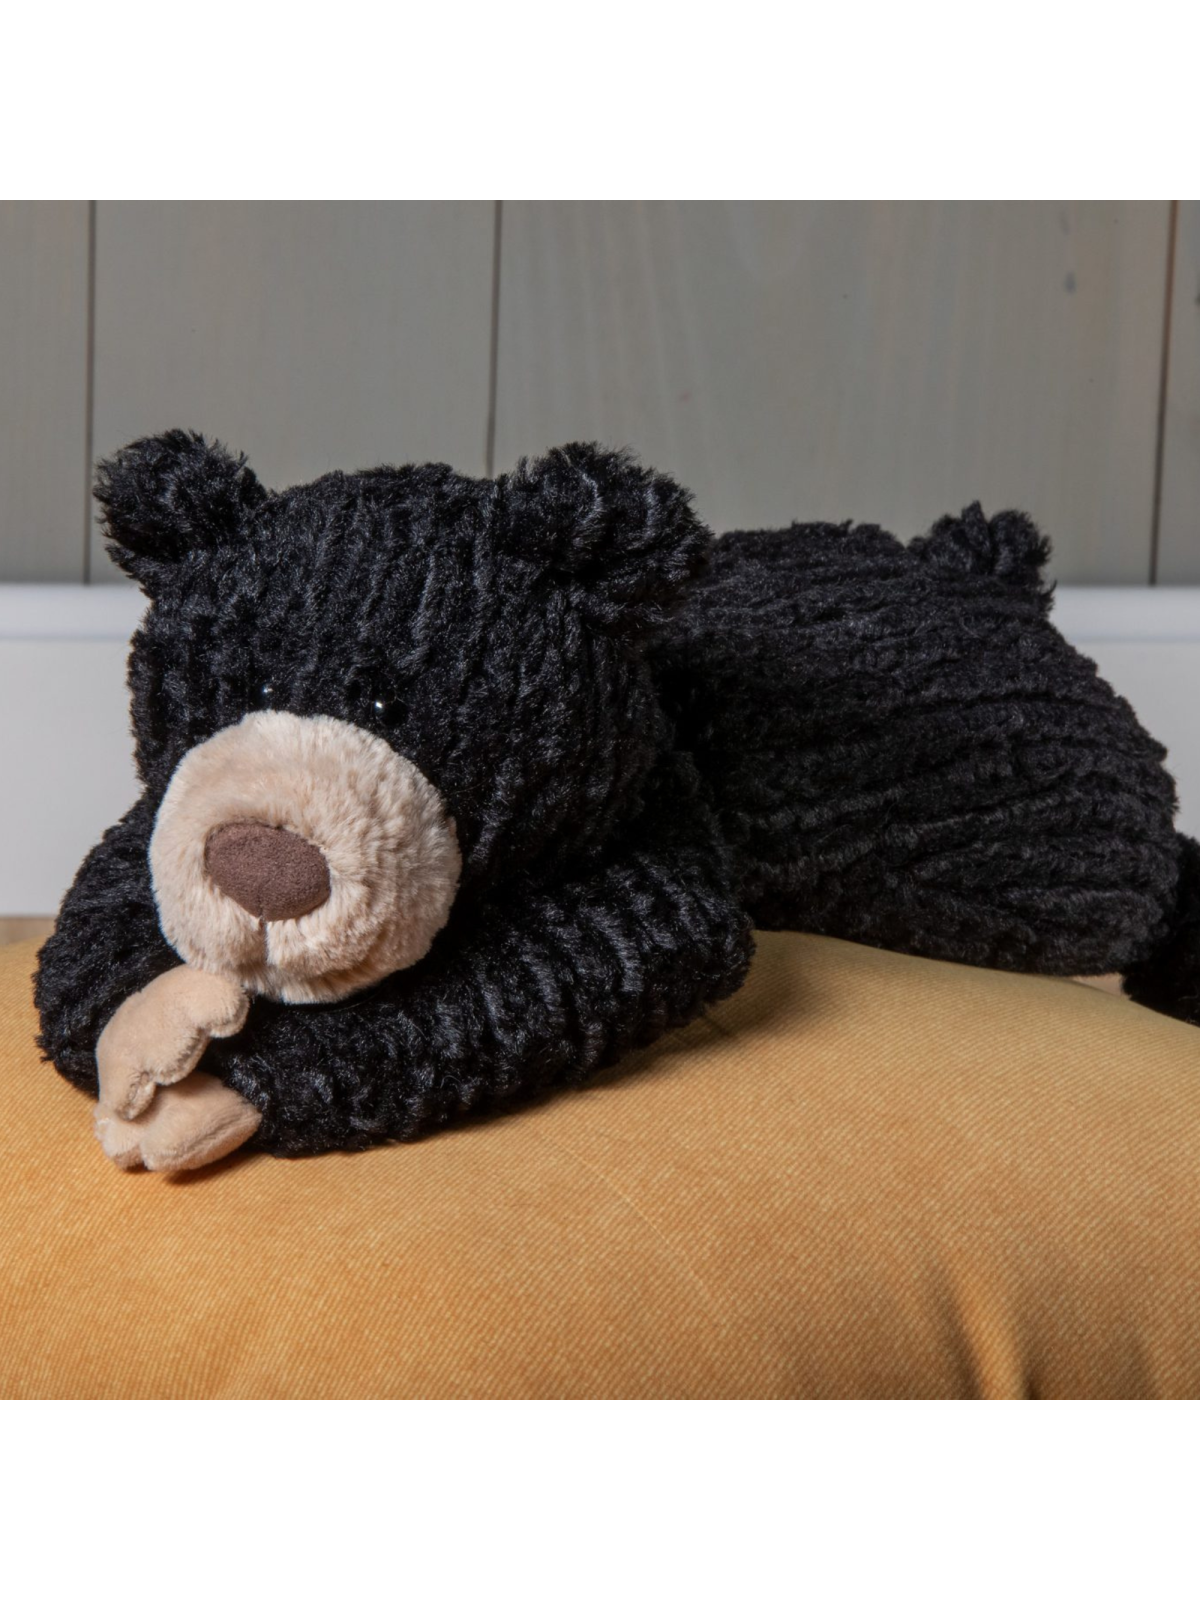 Cozy Toes Black Bear Plush